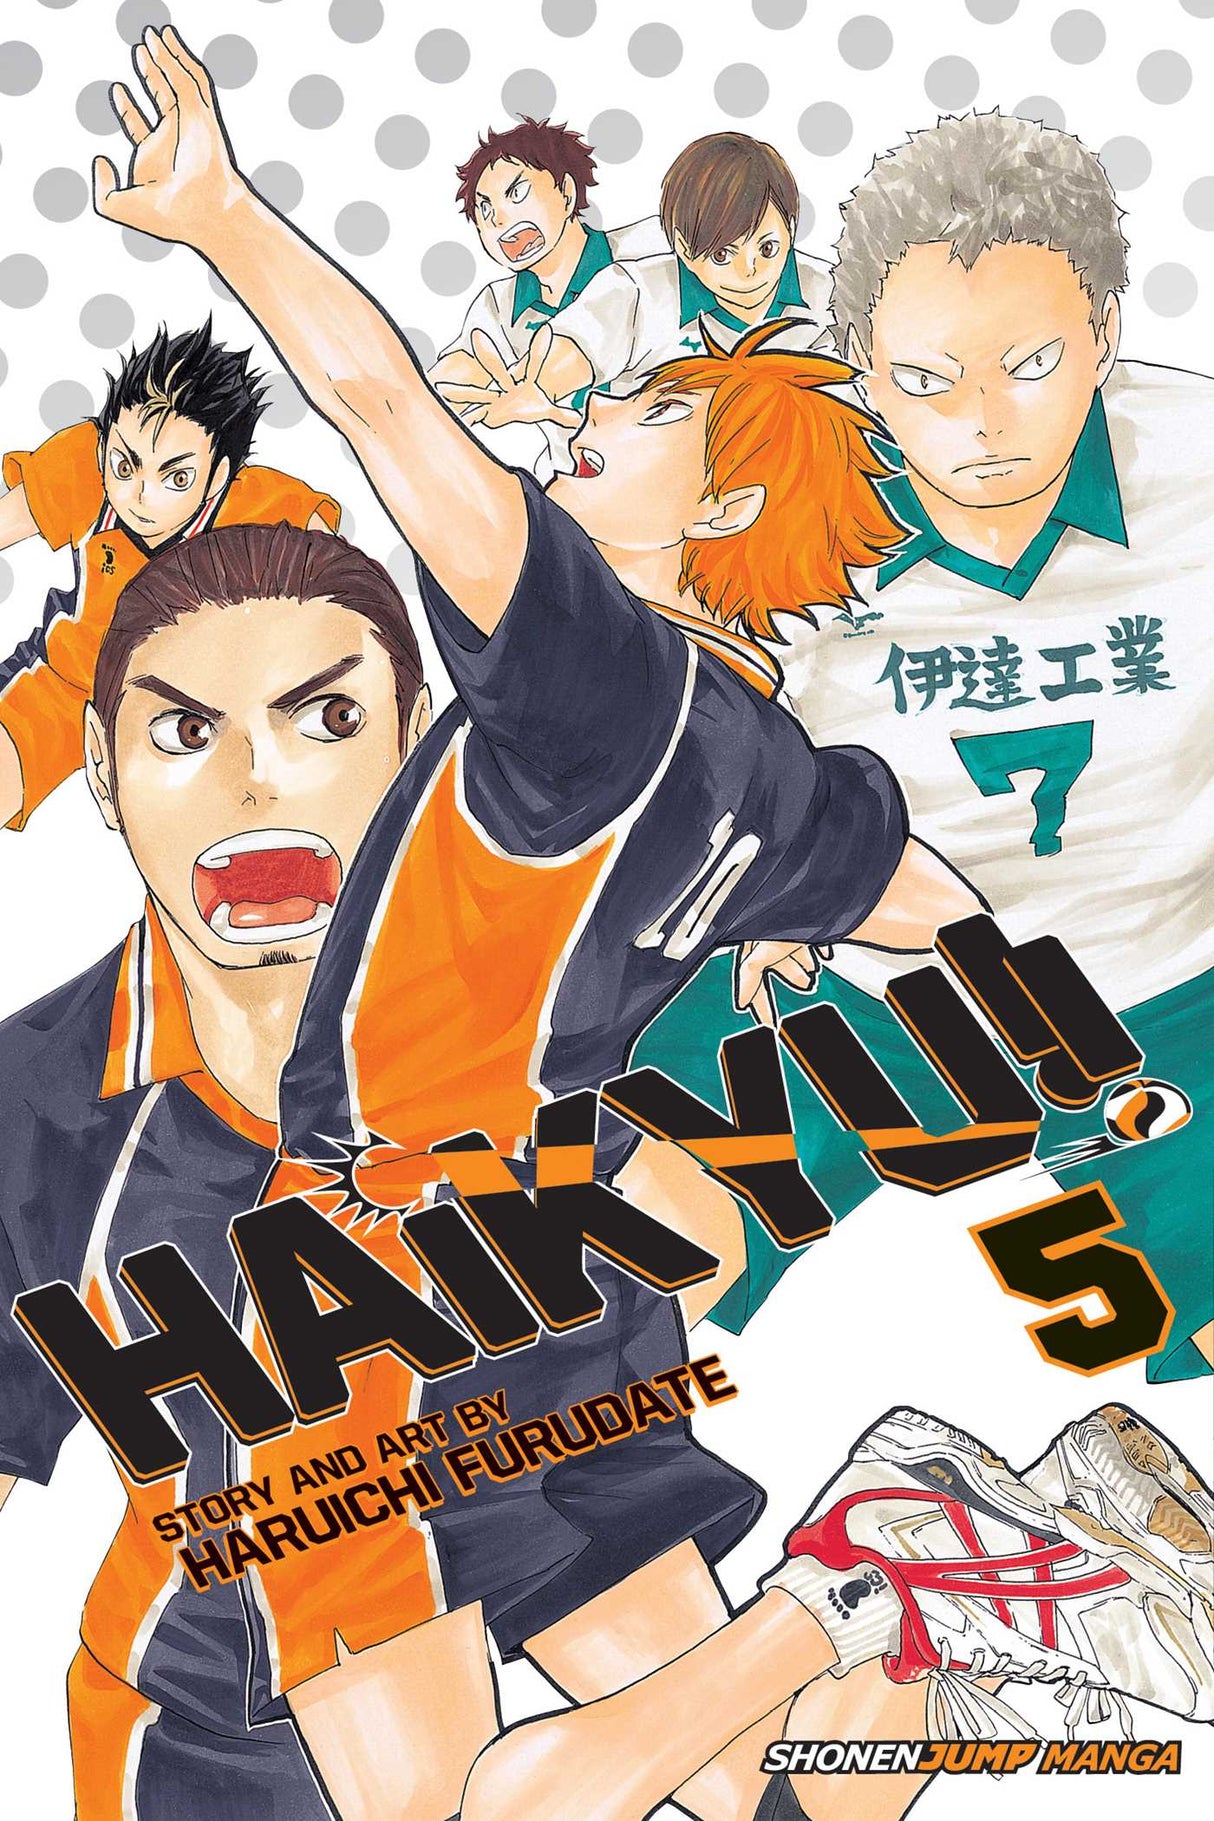 Cover image of the Manga Haikyu!!, Vol. 5